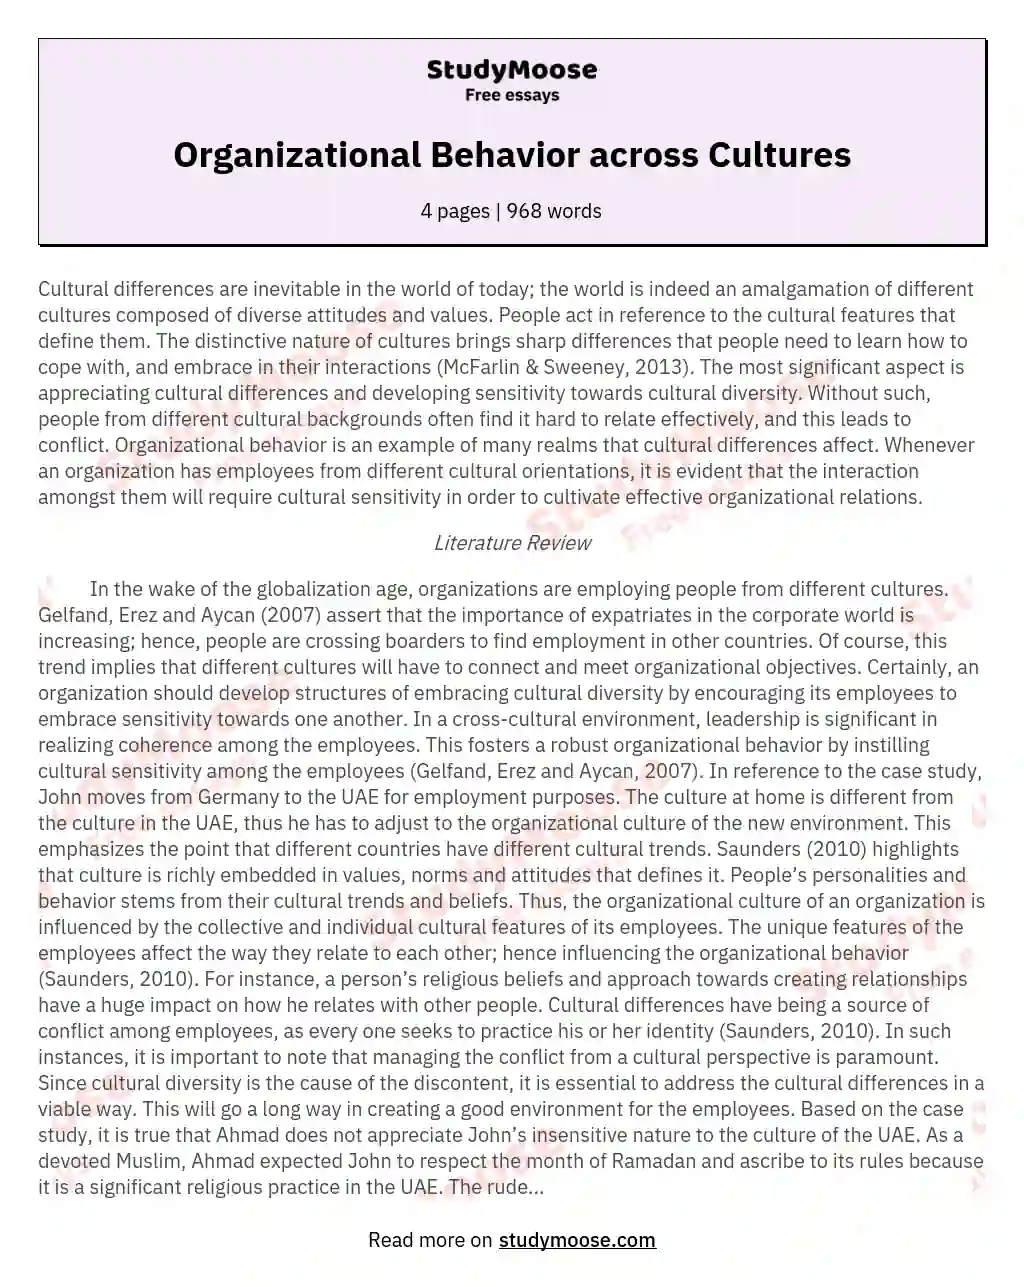 Organizational Behavior across Cultures essay